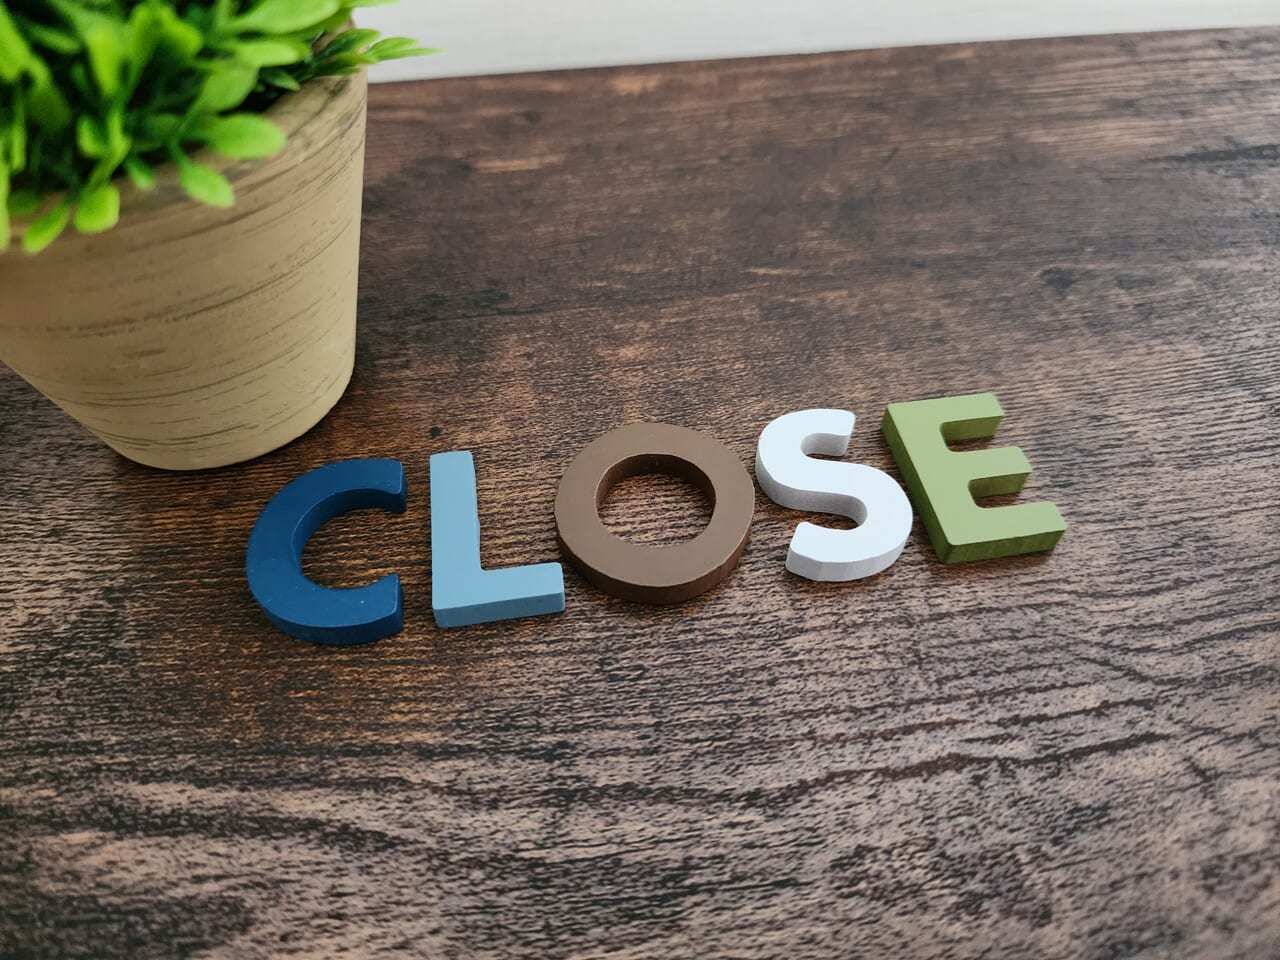 「CLOSE」」のイメージ画像